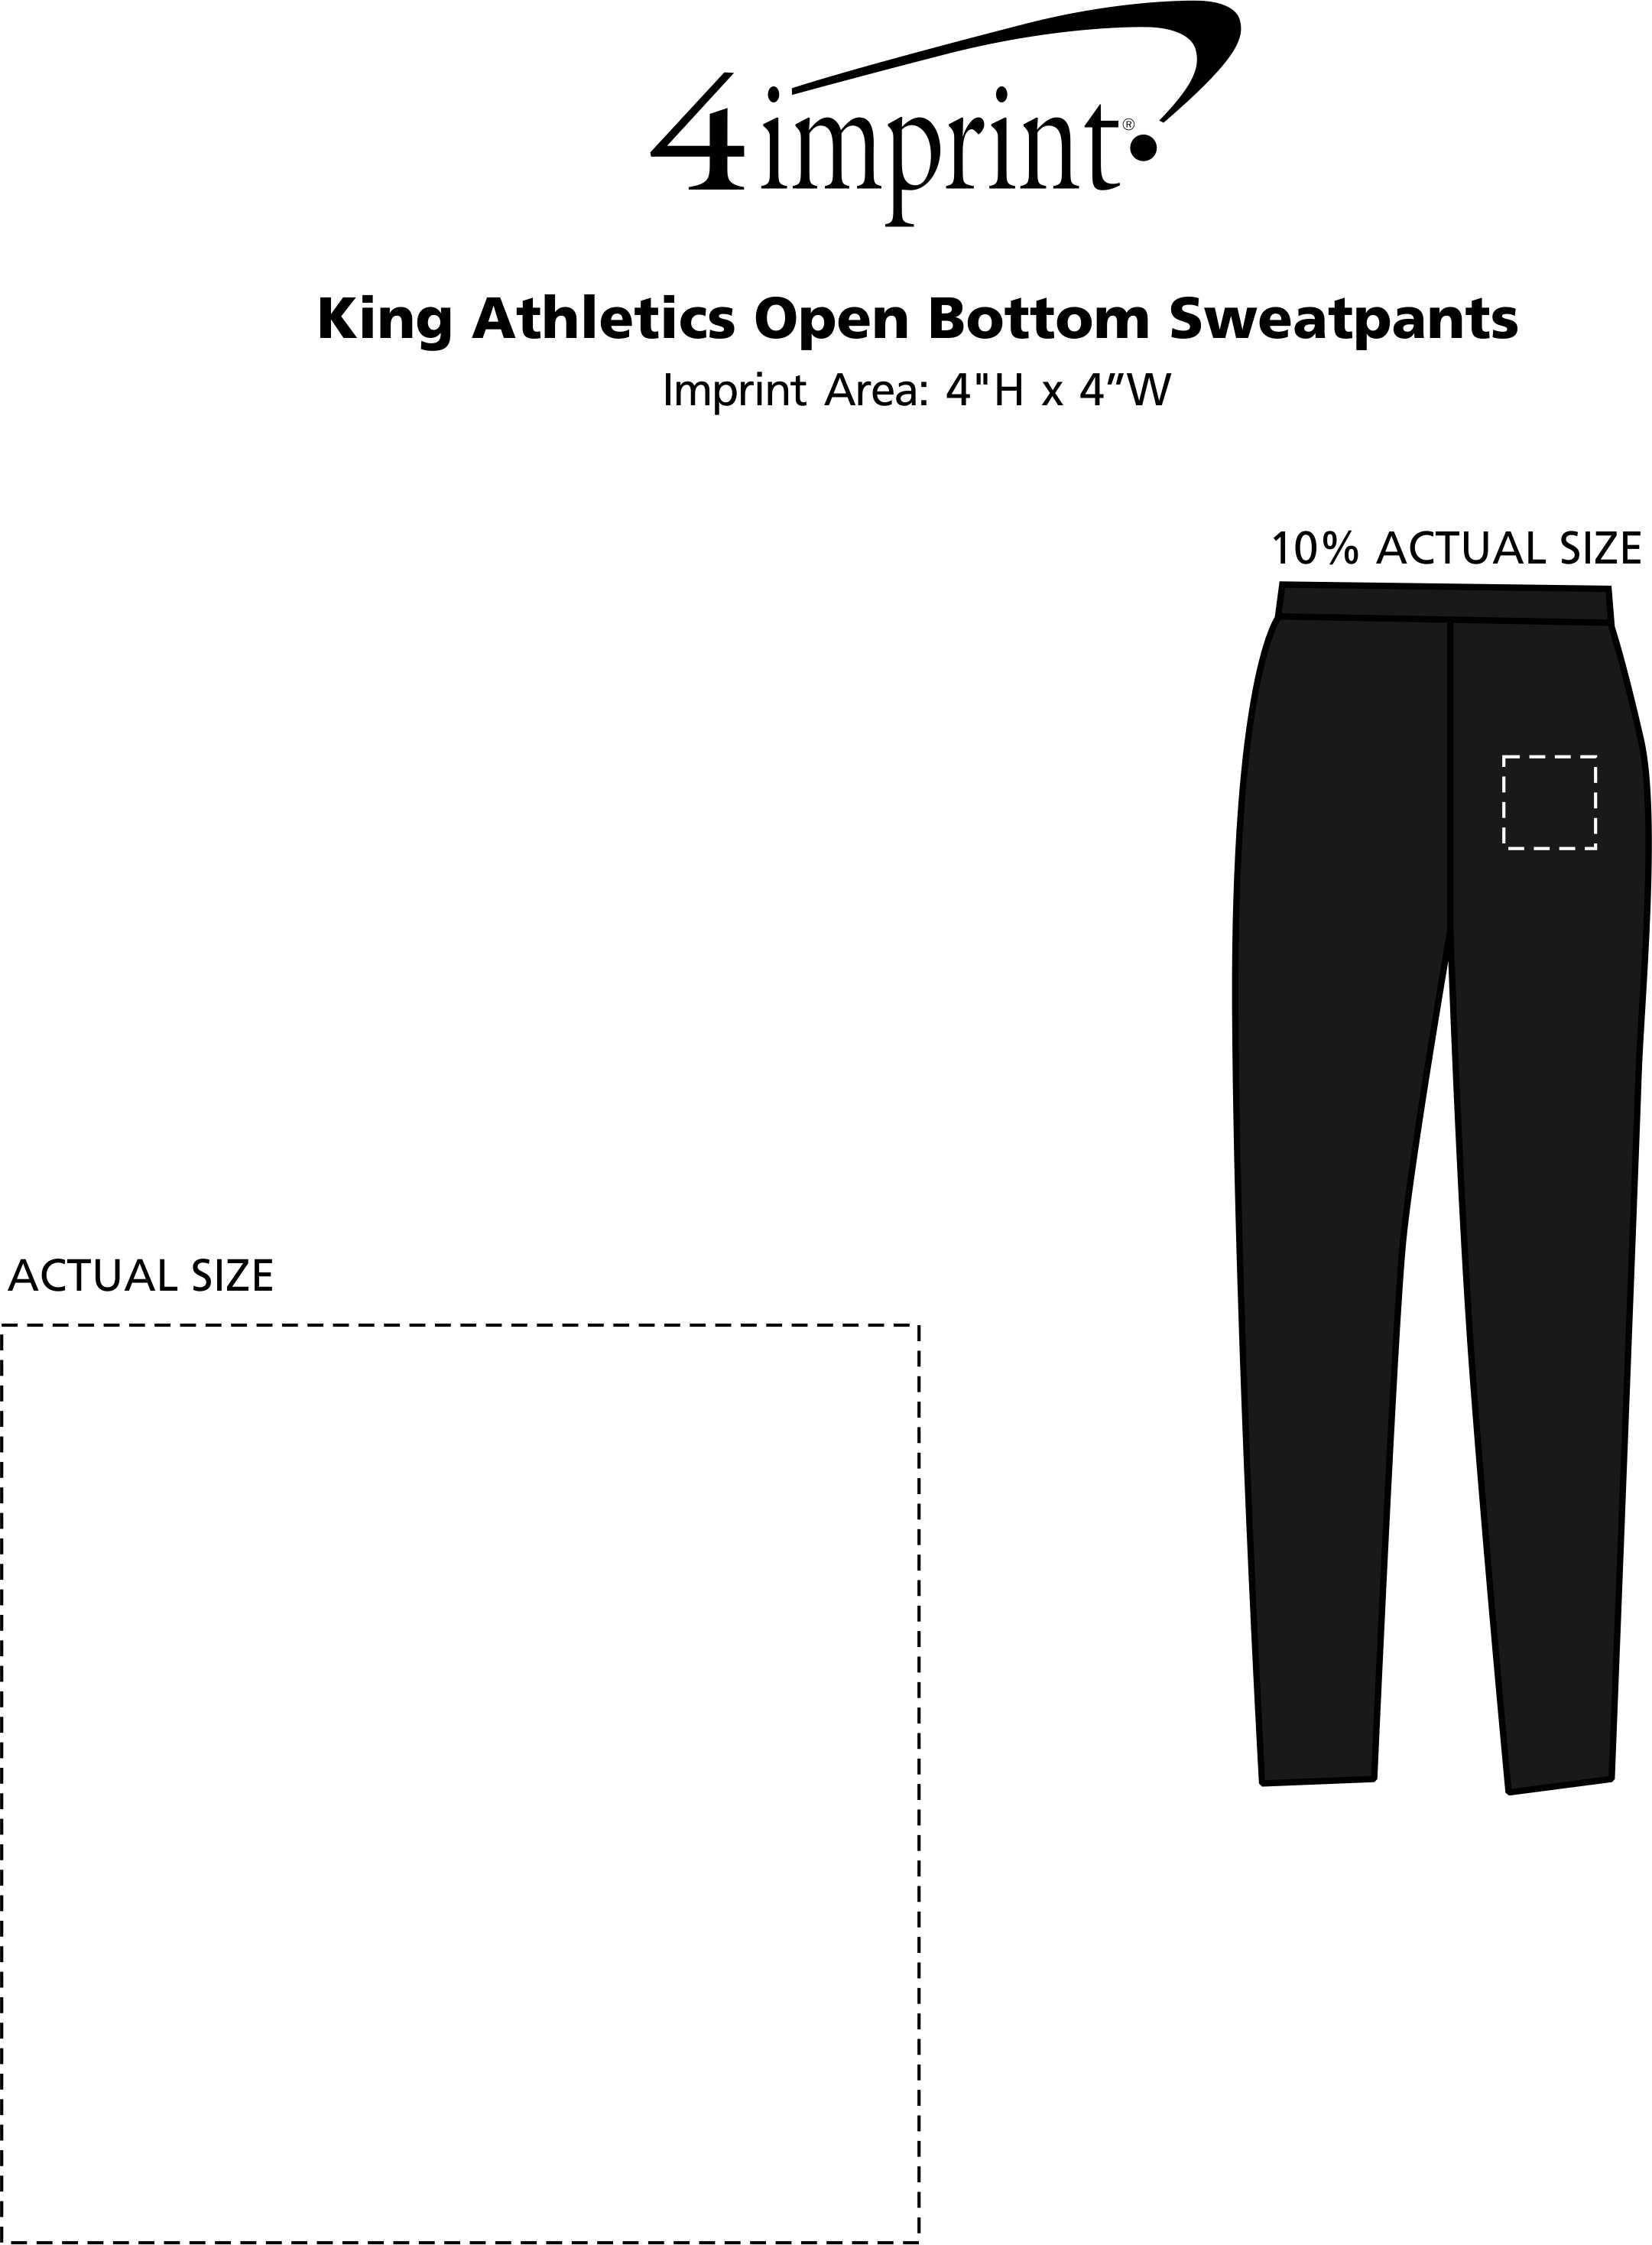 Download 4imprint.ca: King Athletics Open Bottom Sweatpants C150976